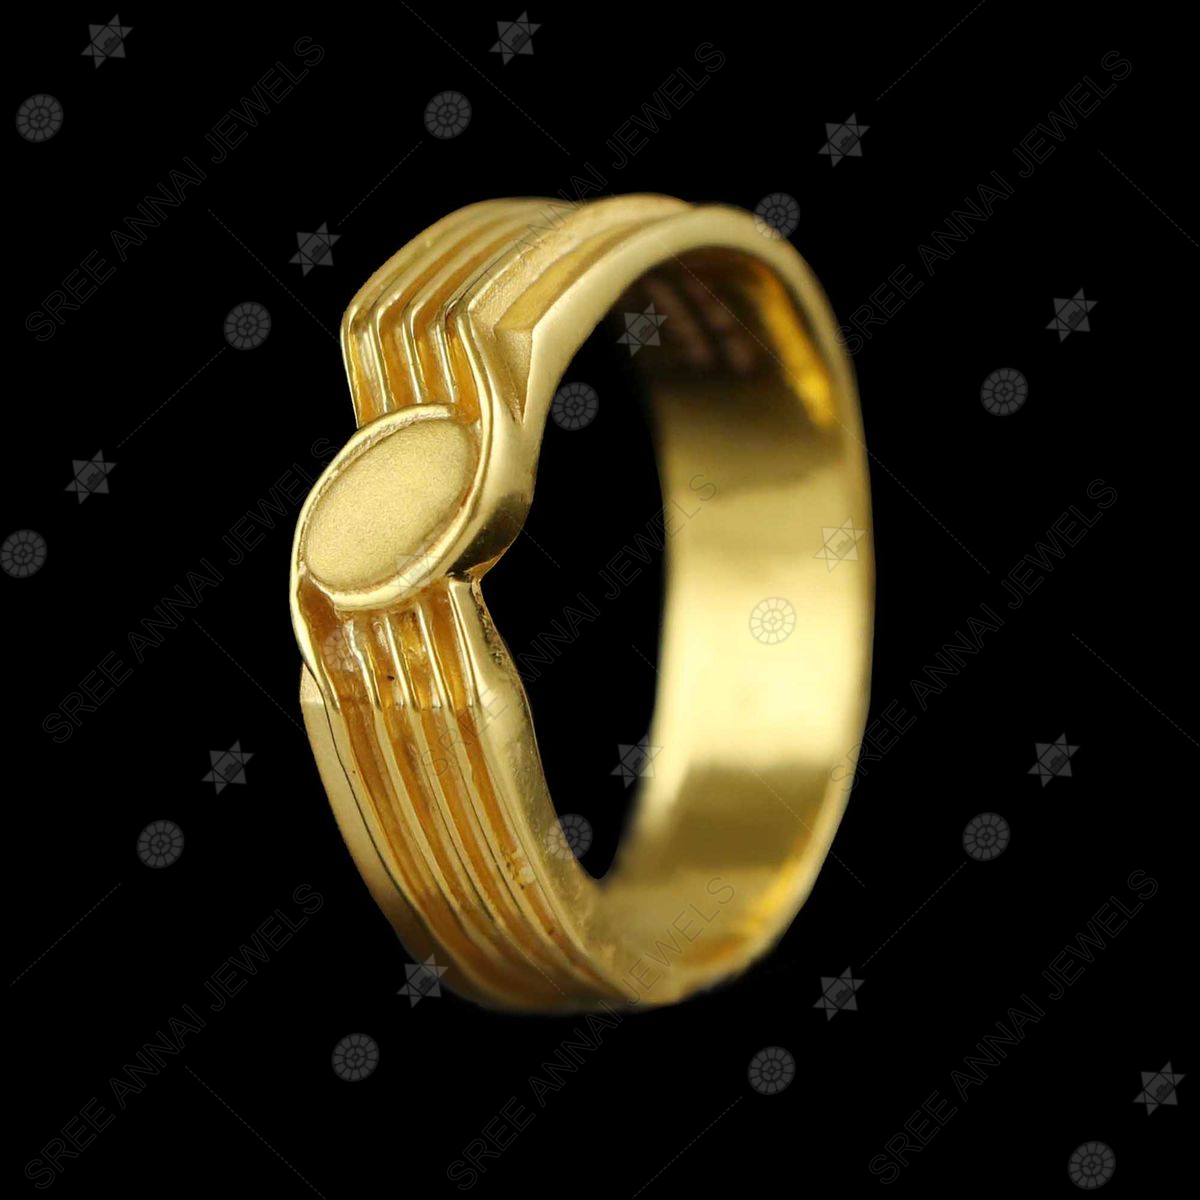 Buy Gold Rings, Elephant Hair Ring Buy Online